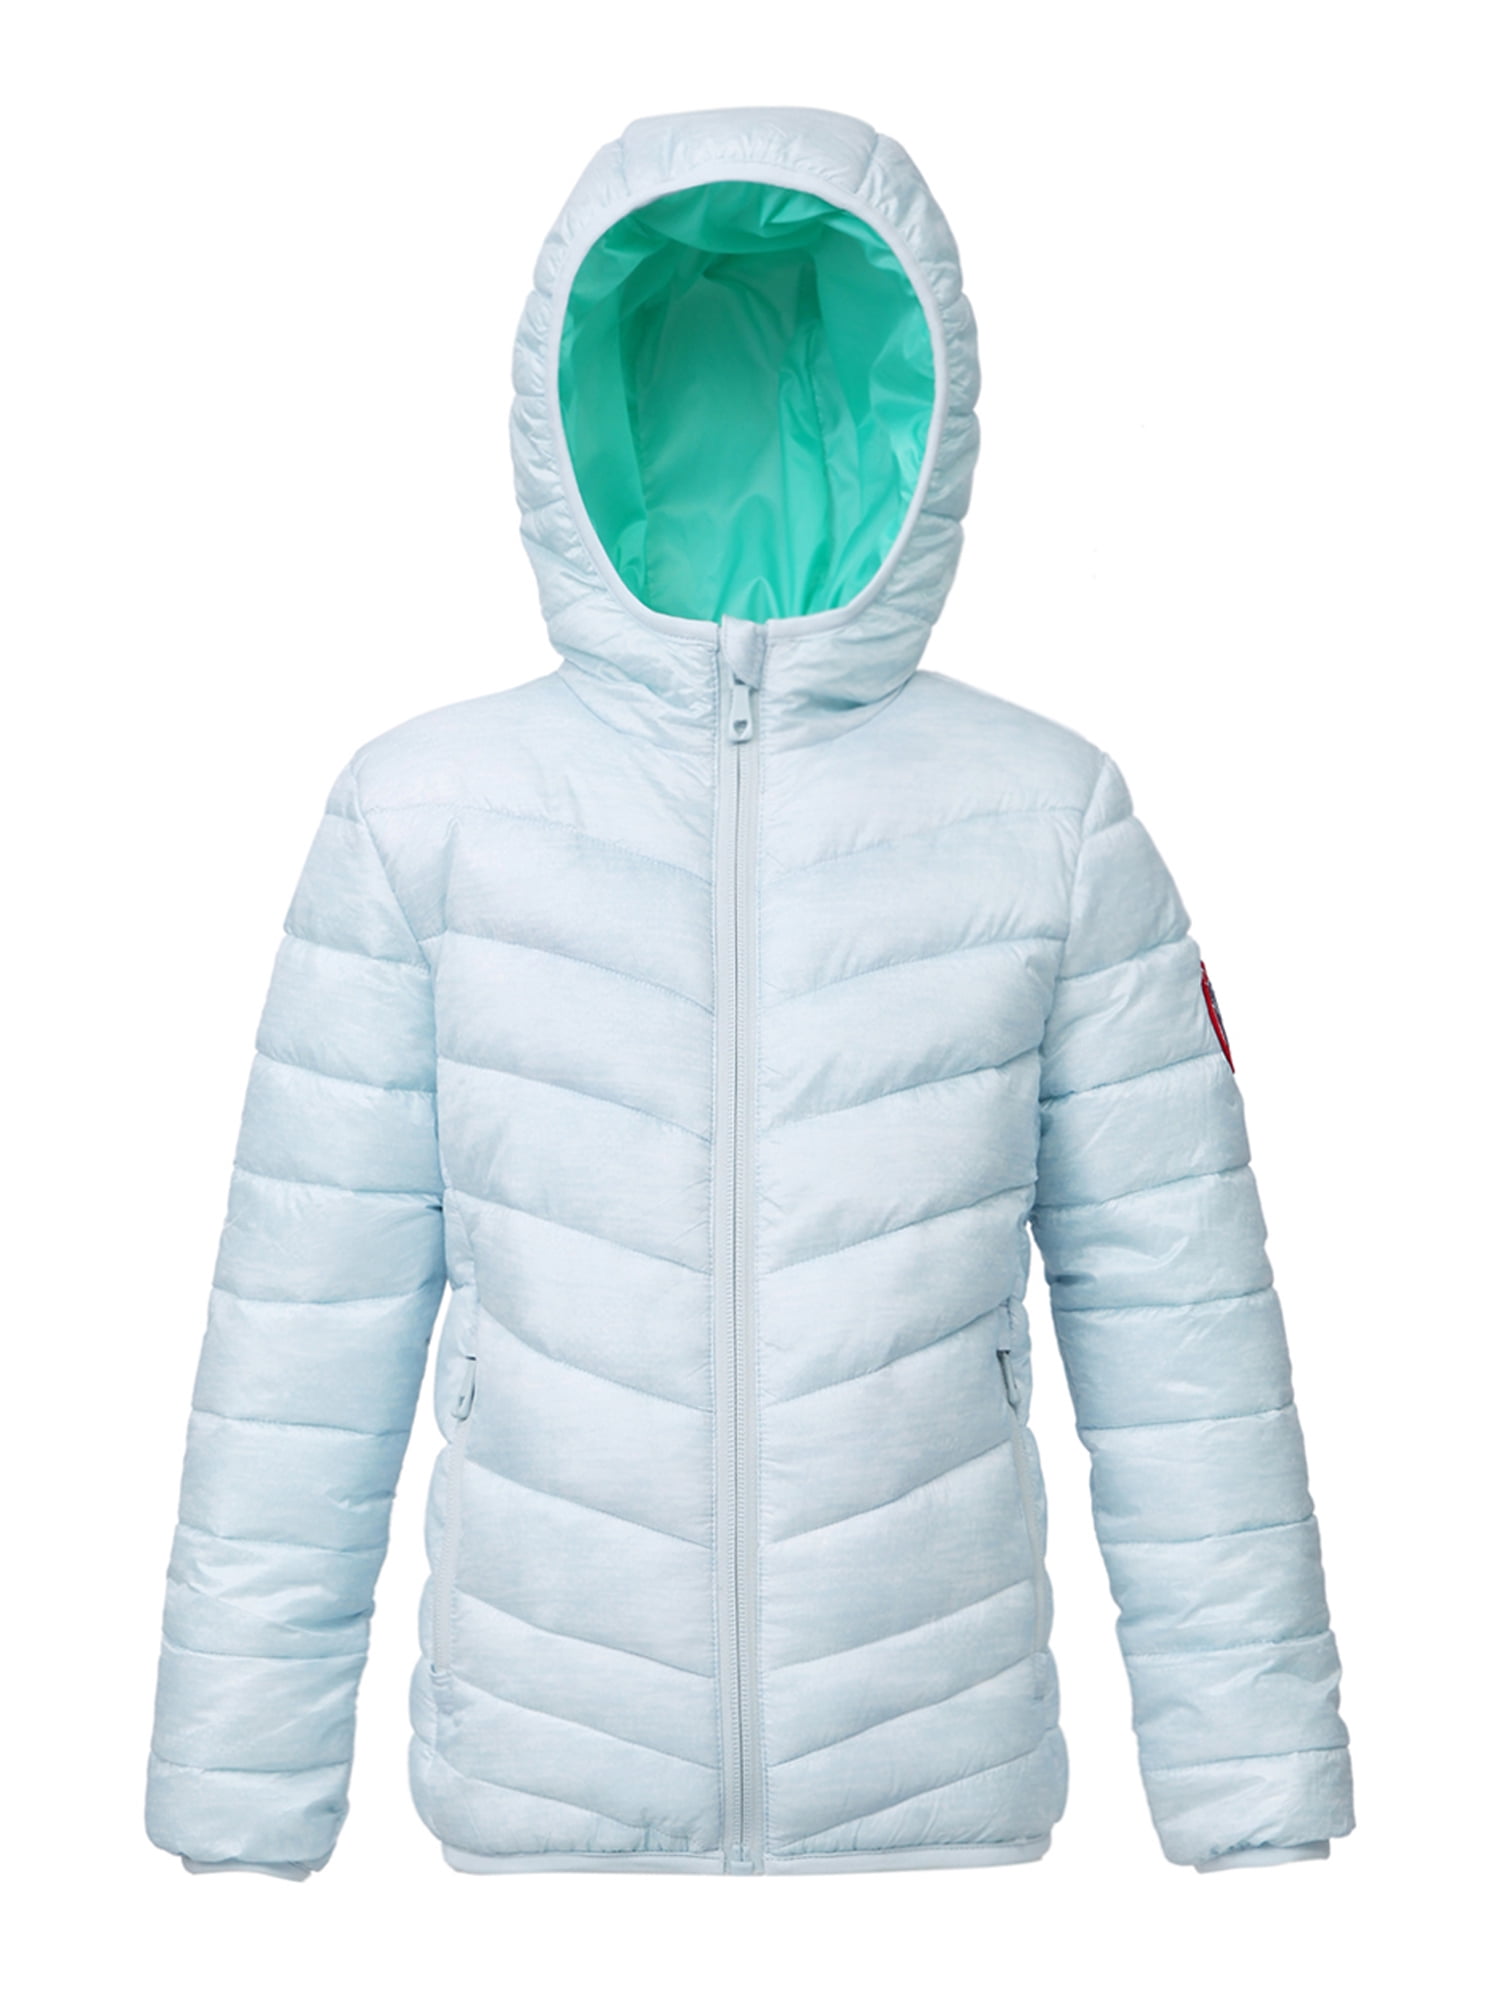 Rokka&Rolla Girls' Reversible Light Puffer Jacket Coat, Sizes 4-18